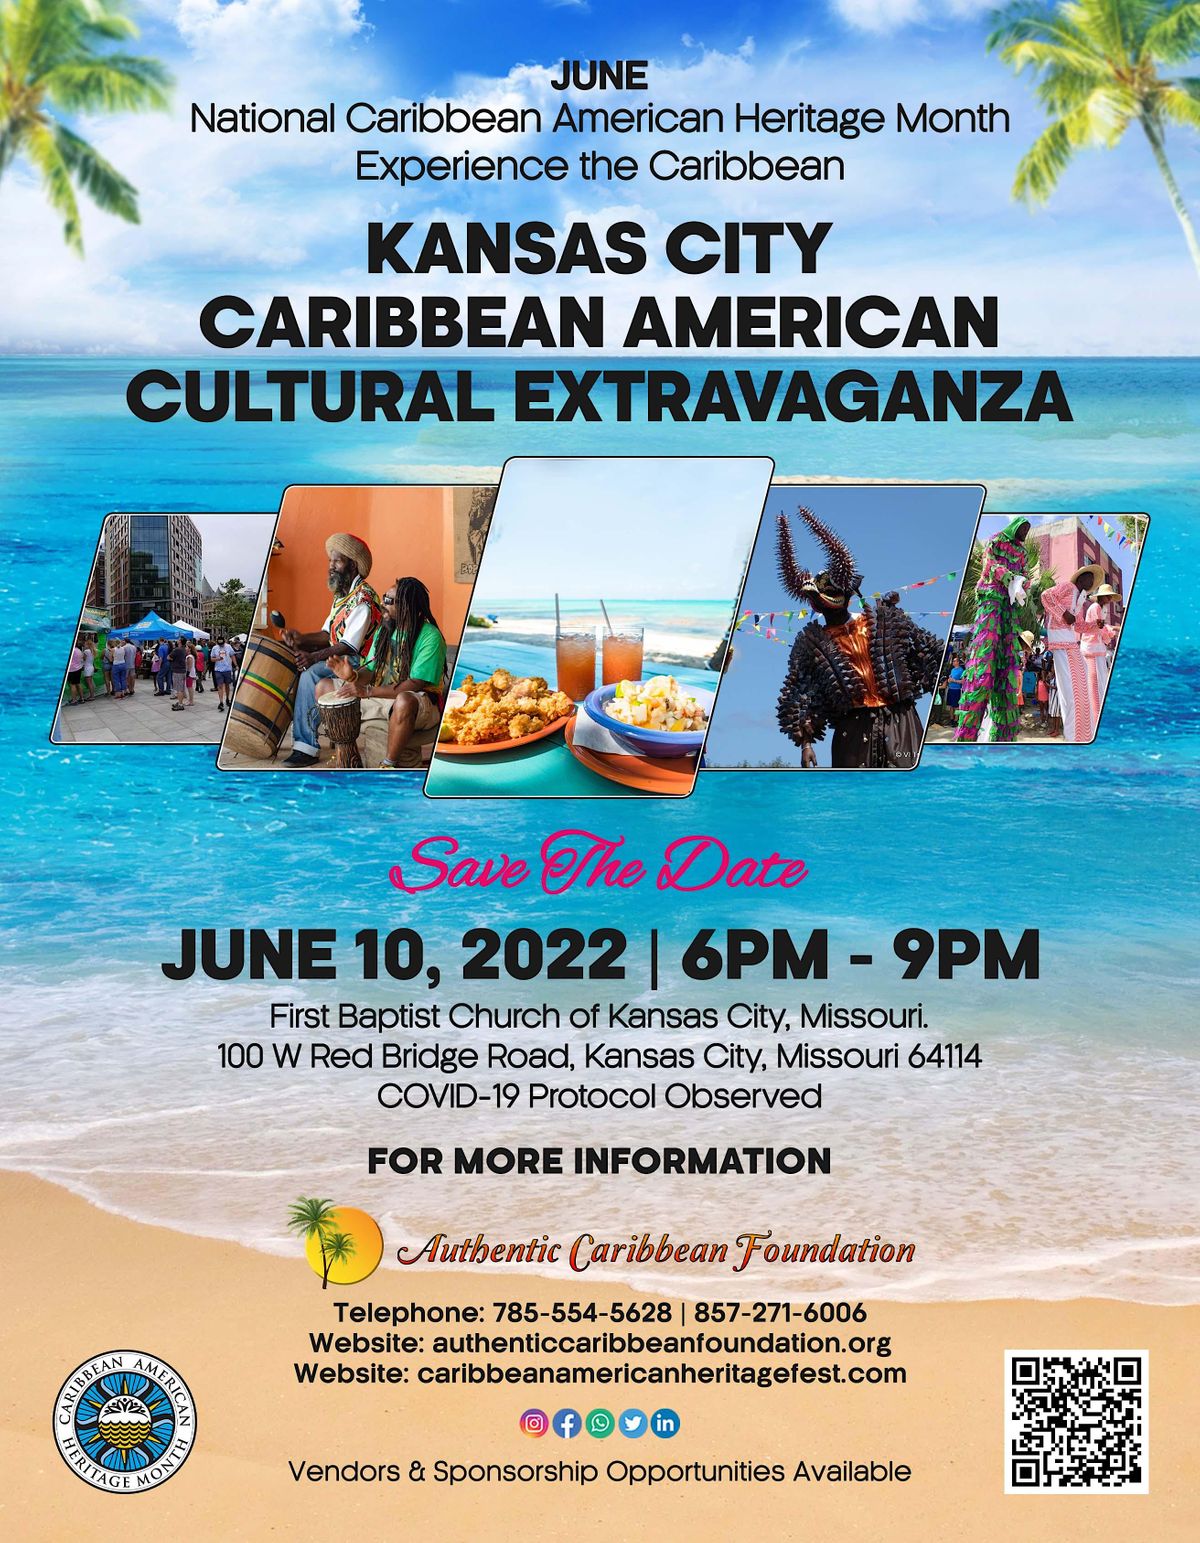 Kansas City Caribbean American Cultural Extravaganza